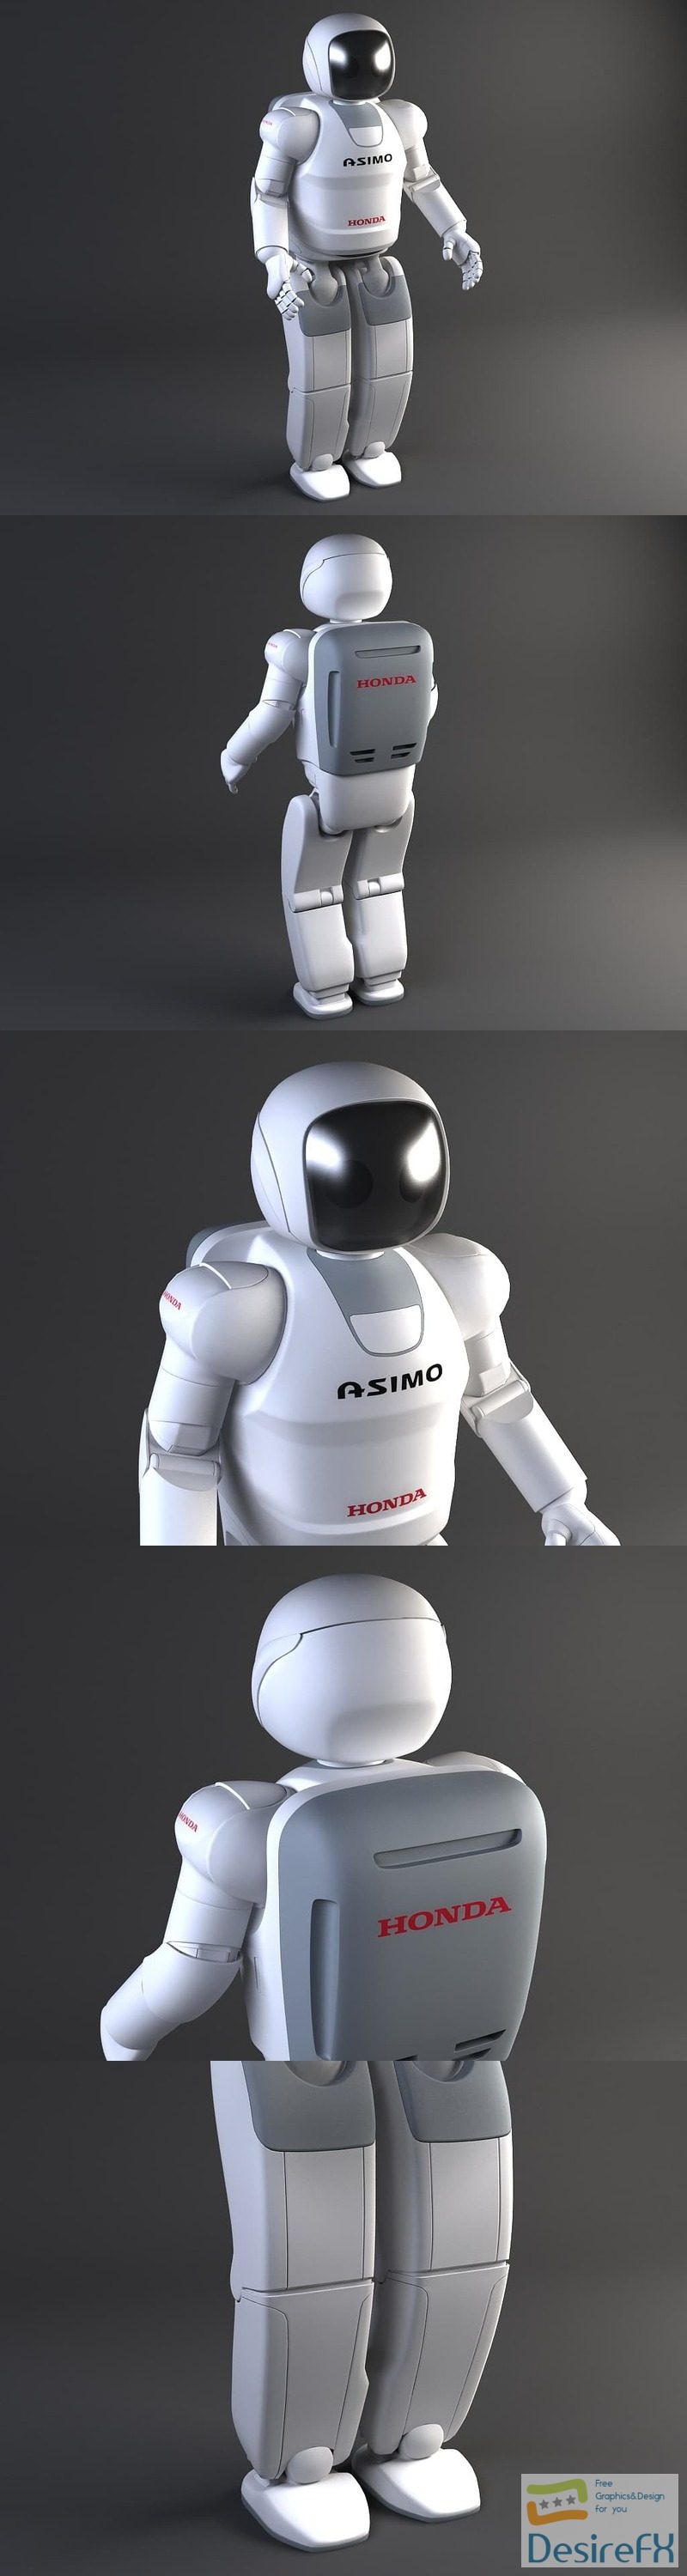 Honda Assimo Robot 3D Model